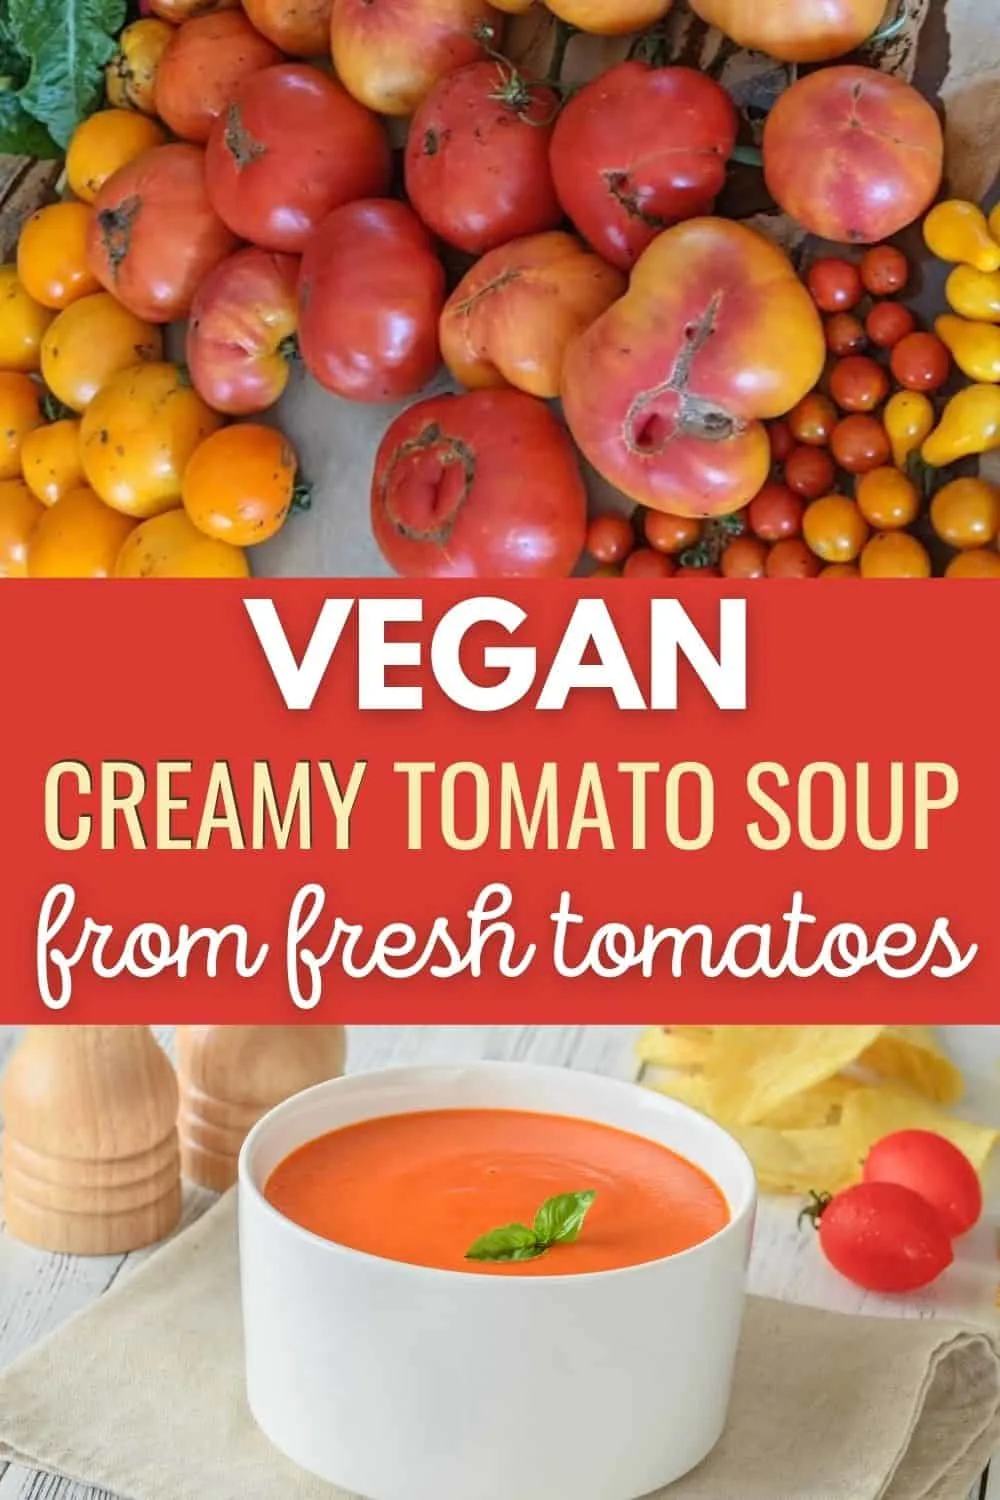 Vegan creamy tomato soup from fresh tomatoes